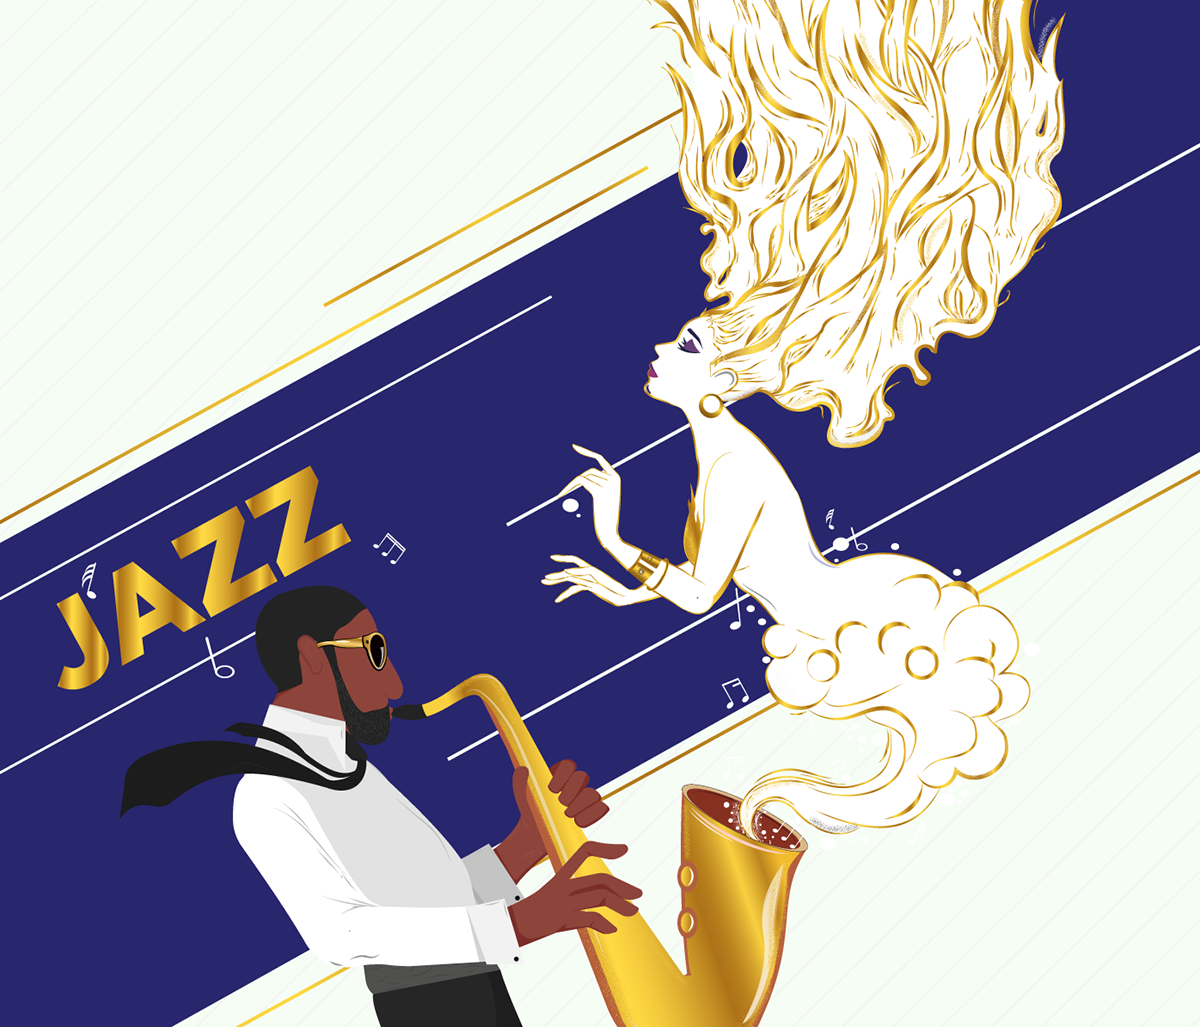 illustracion musica ritmo saxofon